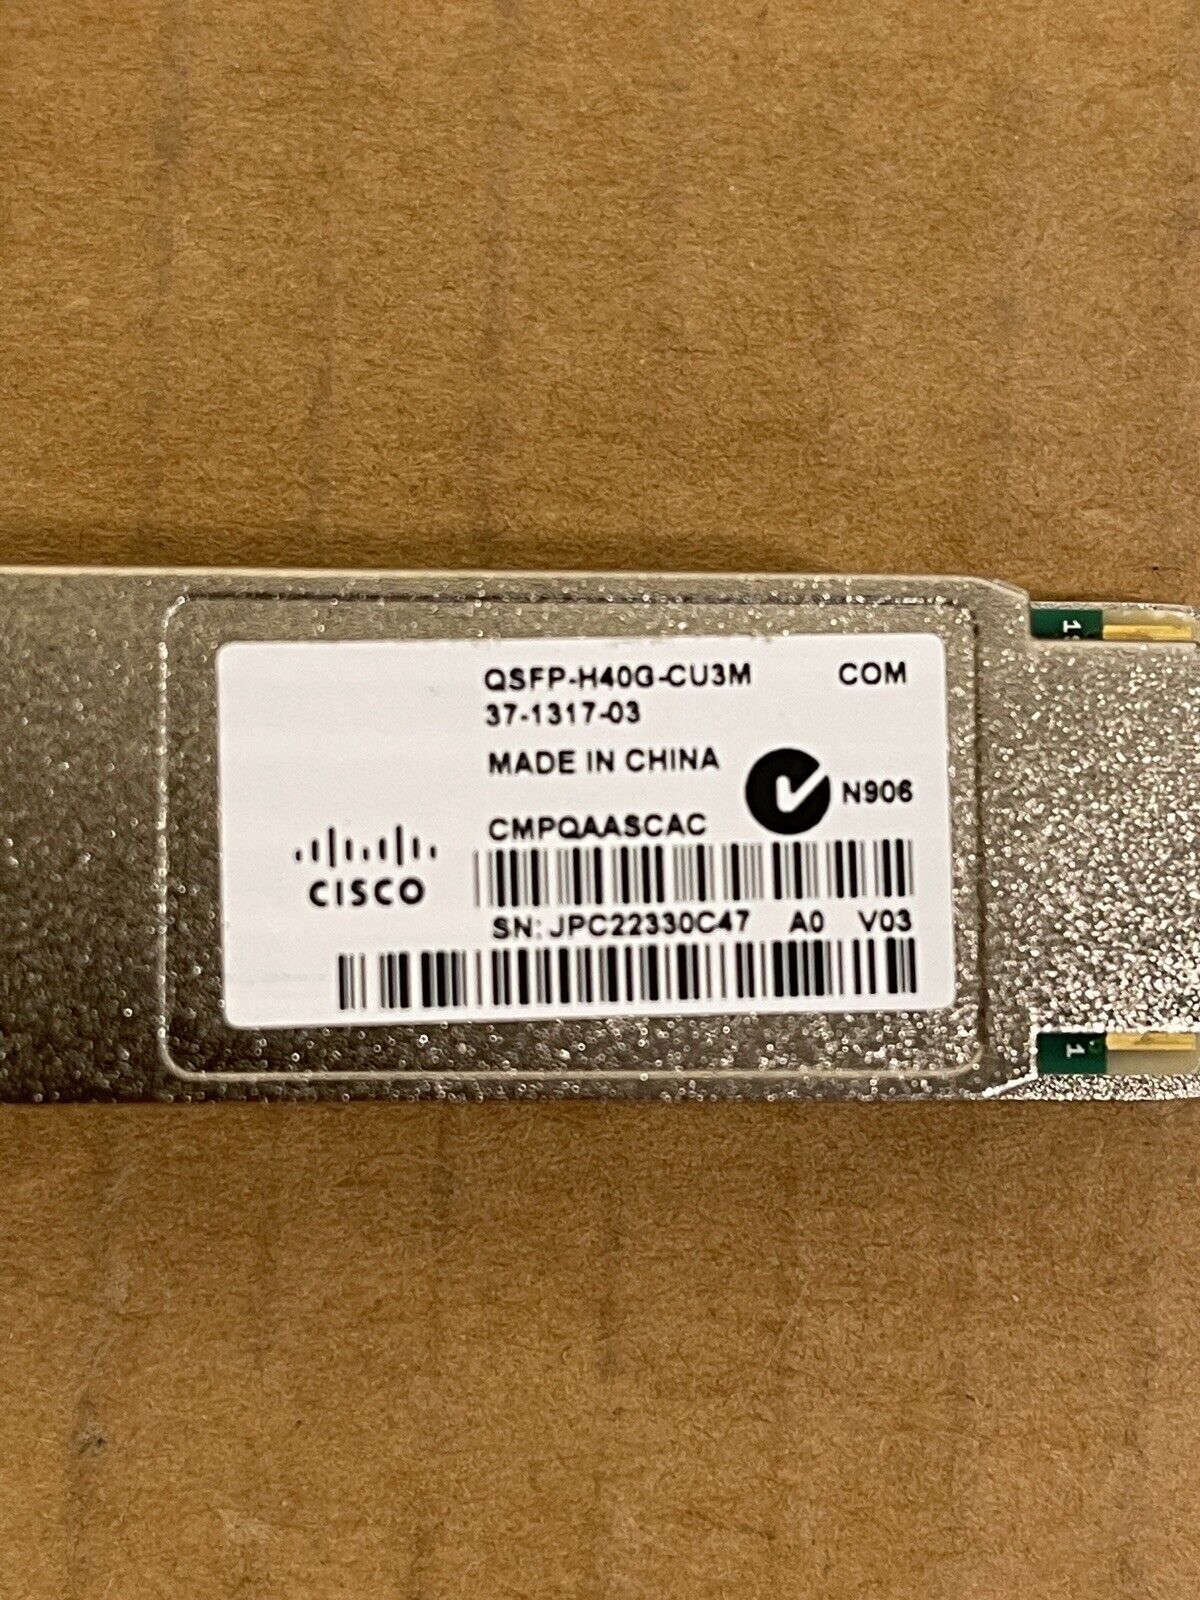 Cisco QSFP-H40G-CU3M 40GBASE-CR4 Passive Copper 3M Direct Attach Cable.